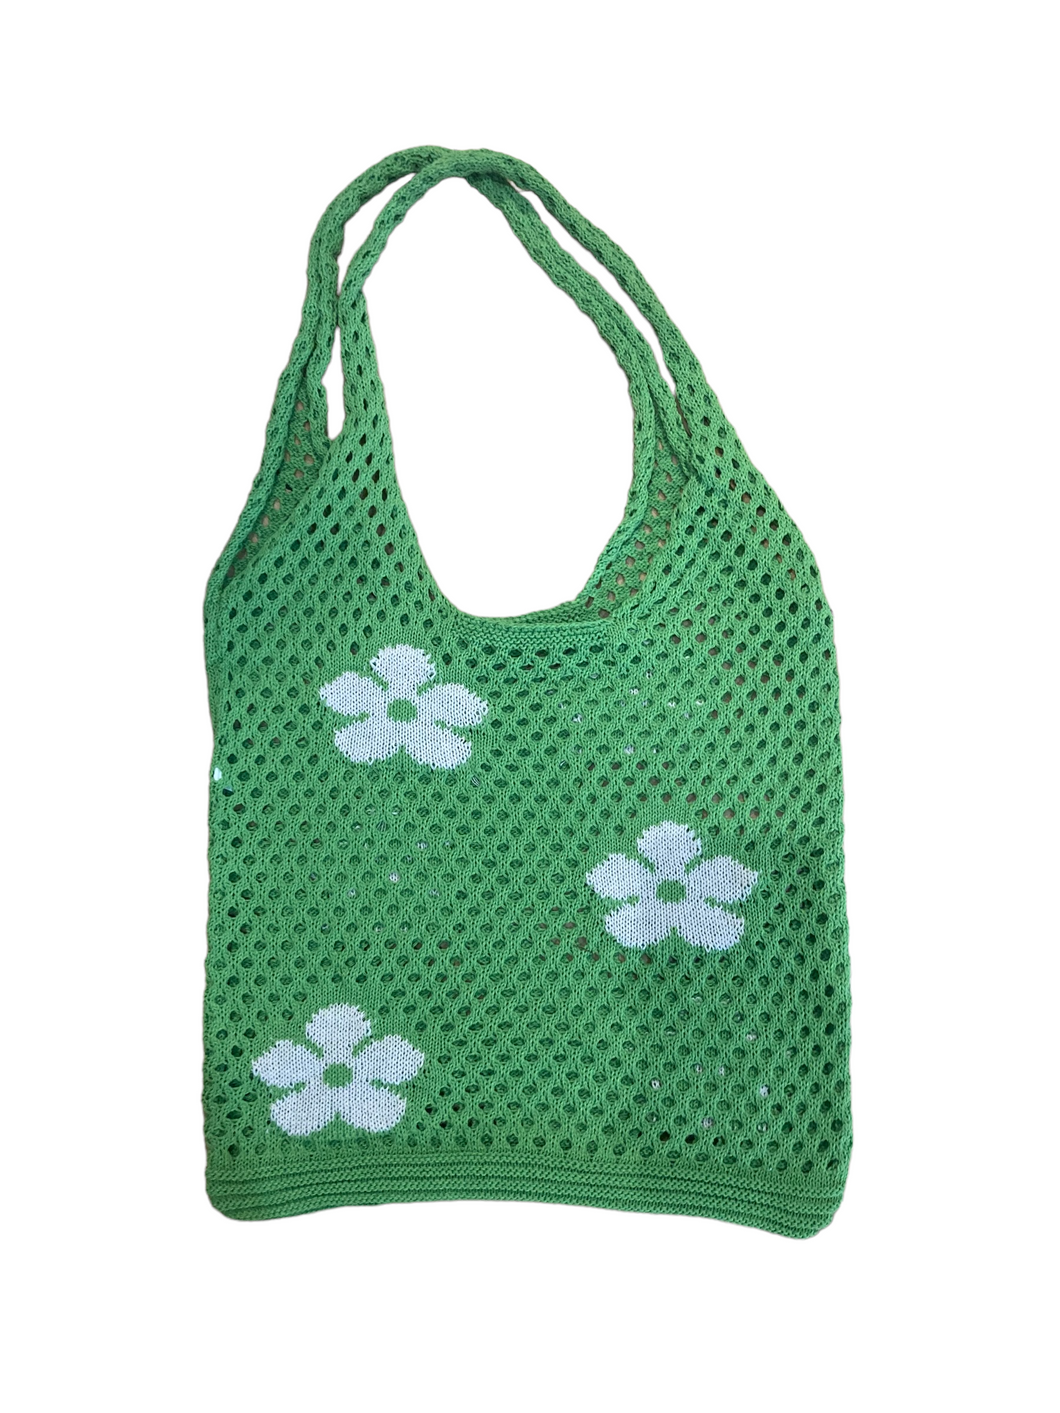 white daisy print green net tote bag